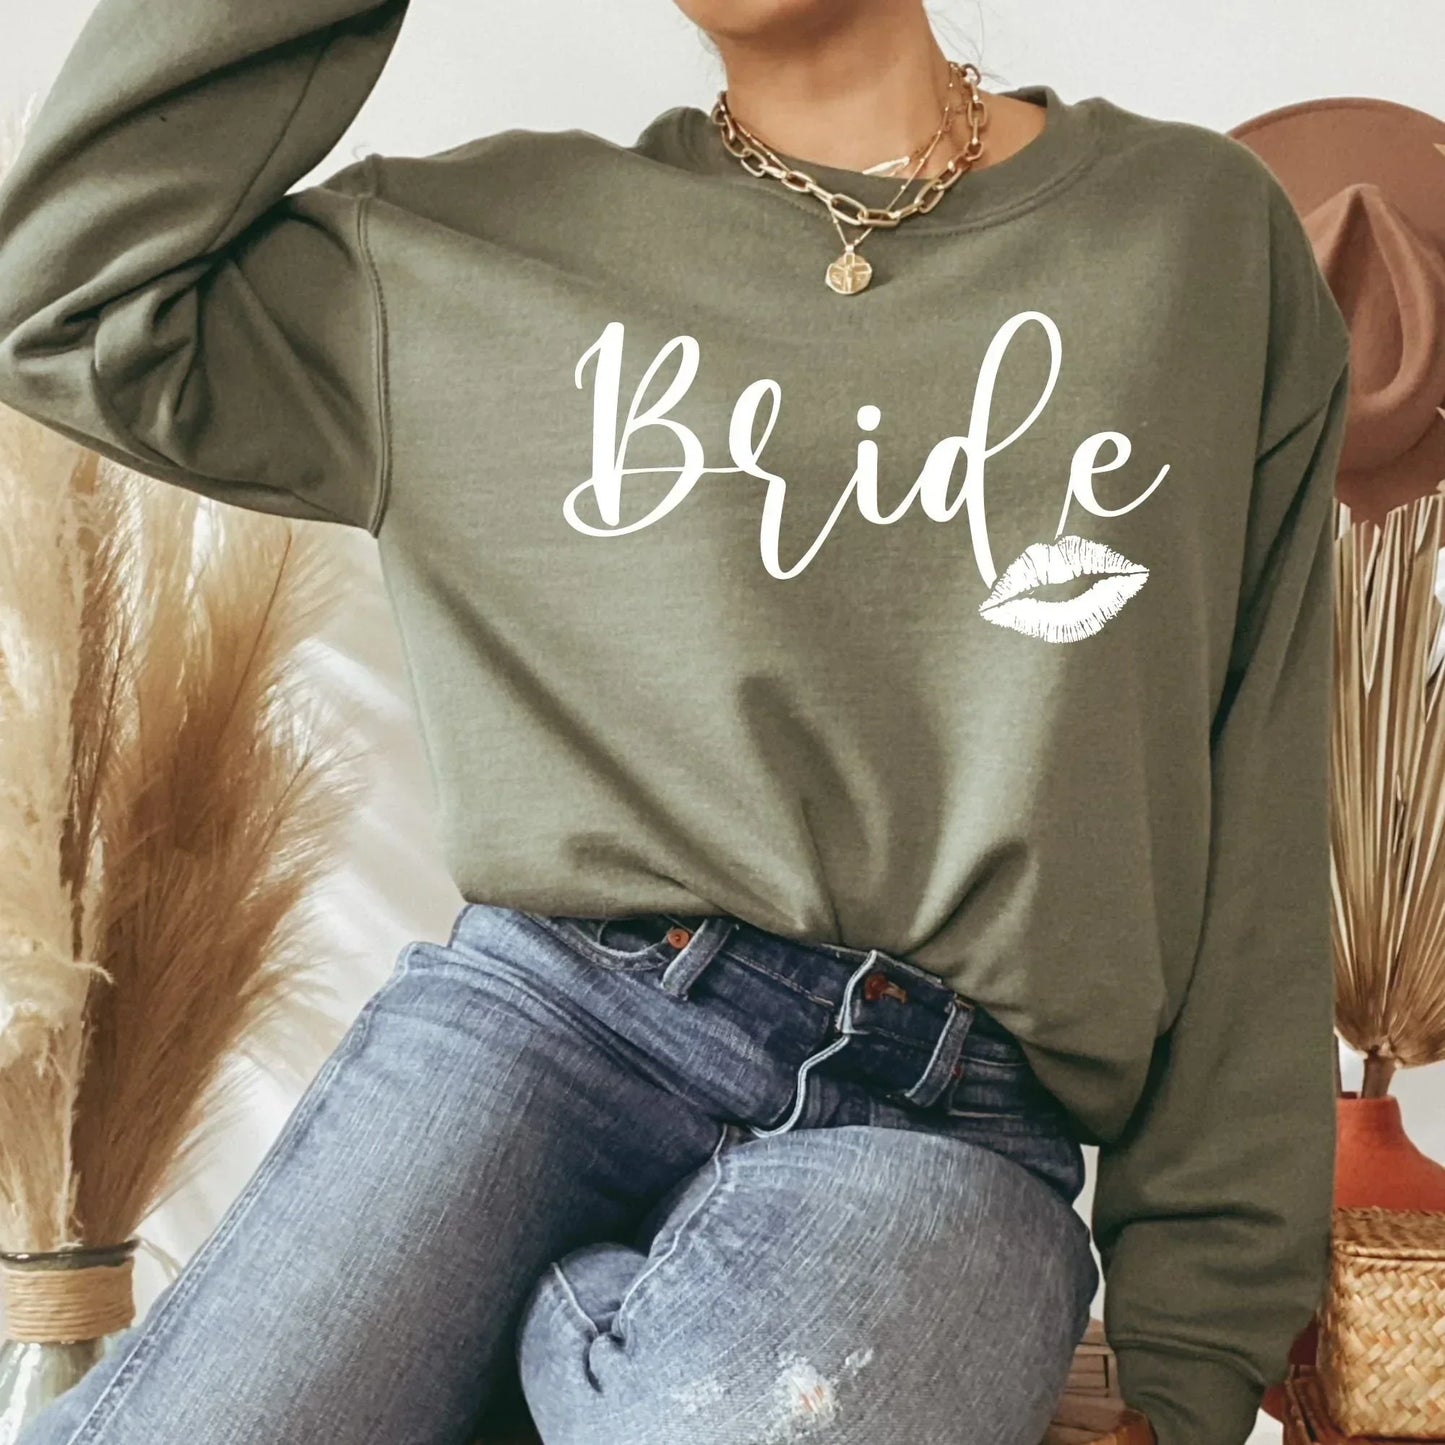 Bride Sweatshirt, Future Mrs Custom, Wifey Sweatshirt, Getting Ready Outfit, Team Bride Shirt, Wife Hoodie, Gift for Bride, Crewneck Sweater